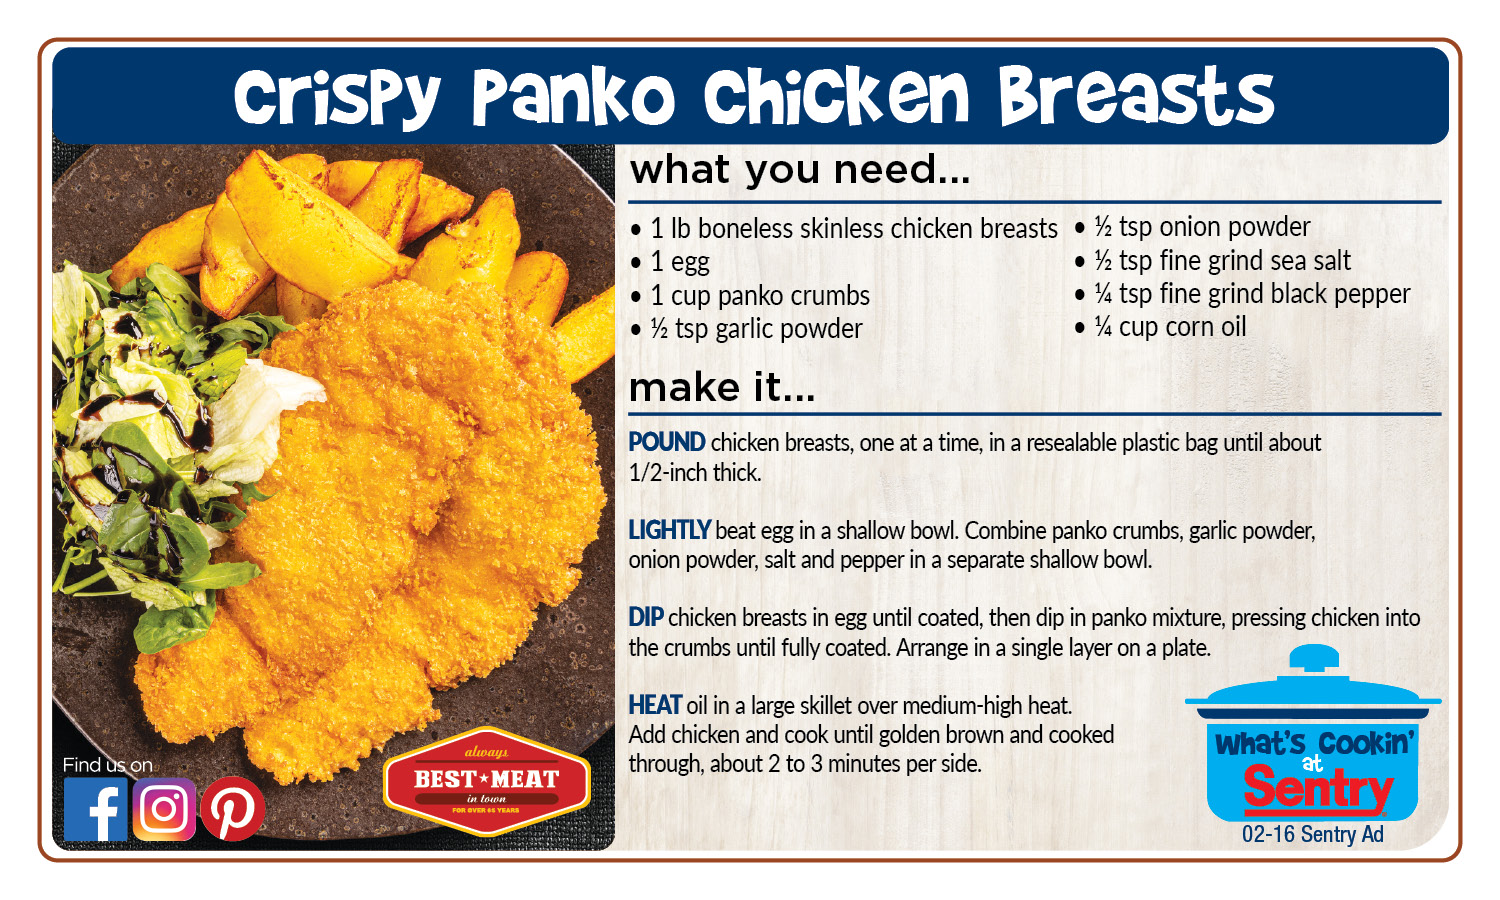 Crispy Panko Chicken Breast